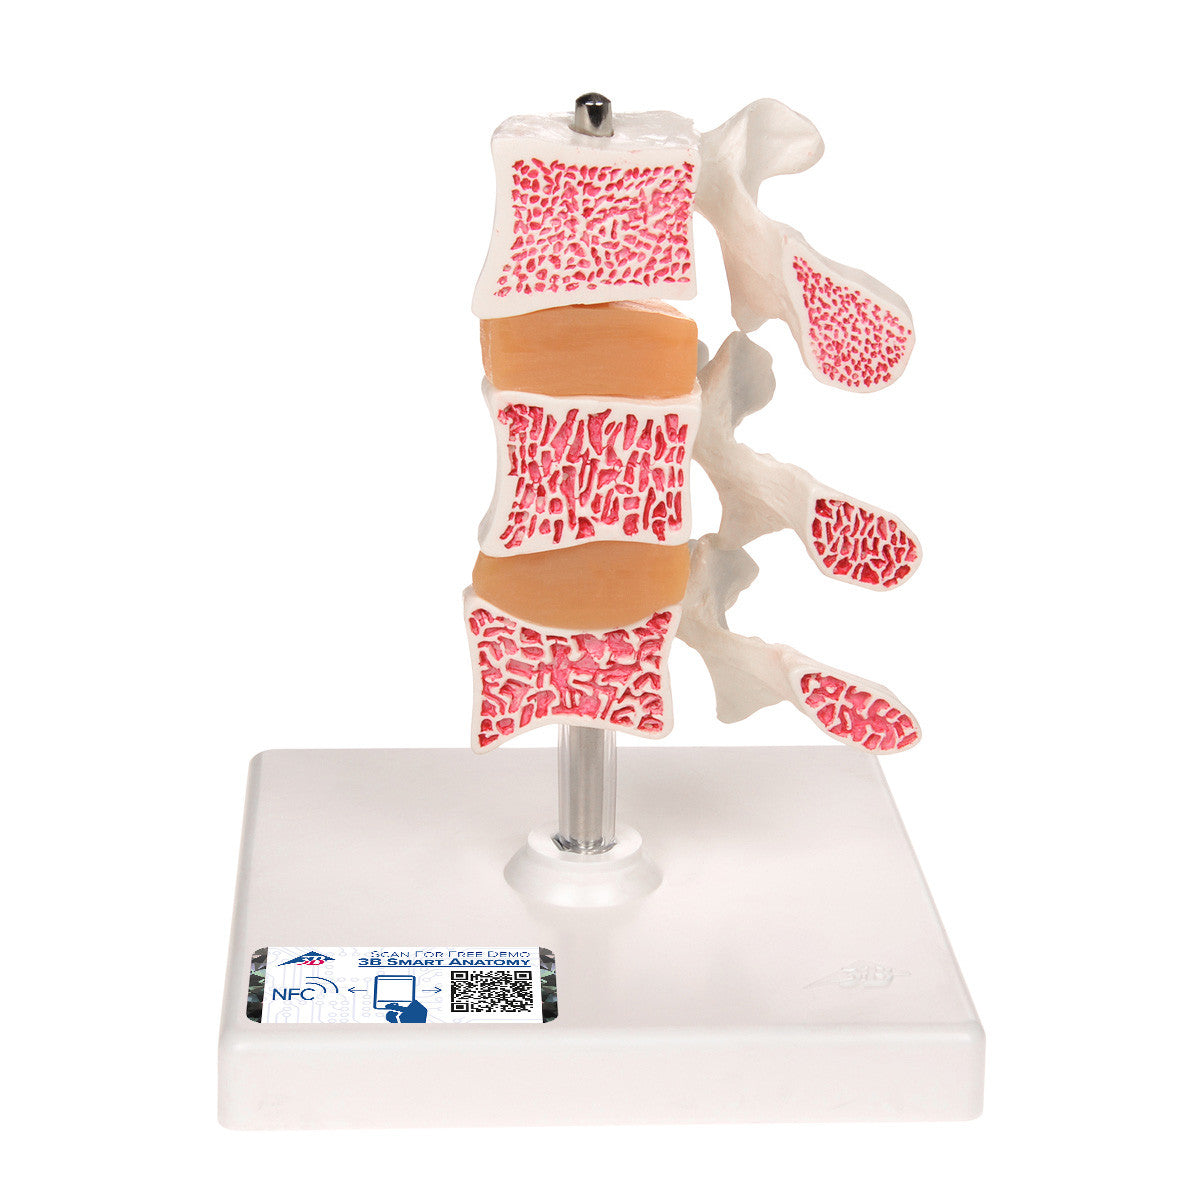 Deluxe Osteoporosis Model - 3B Scientific A78